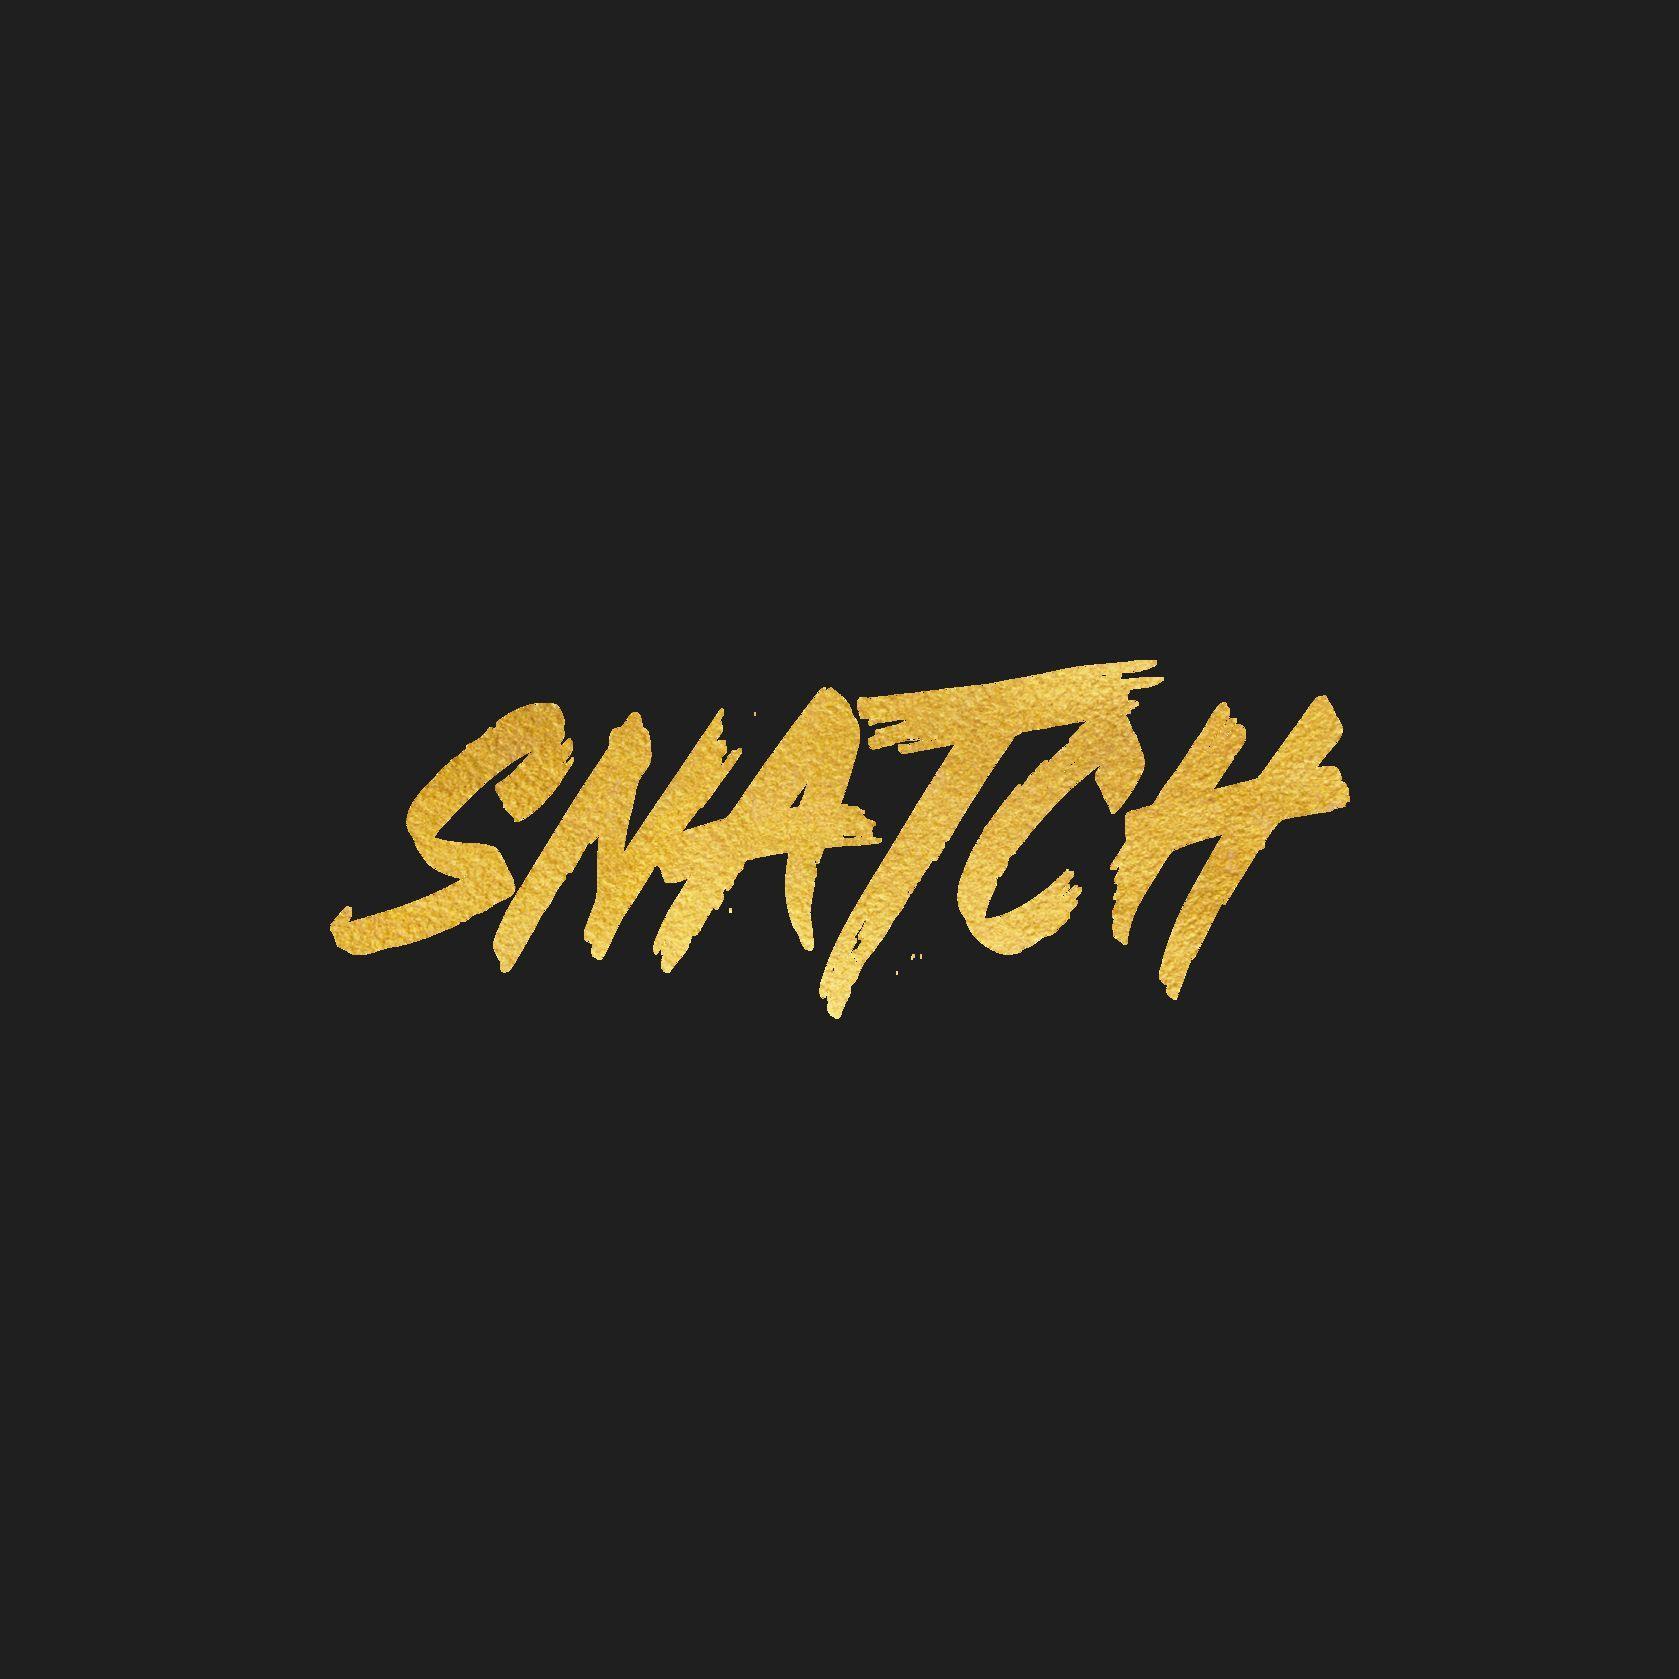 Player sNatchLV avatar